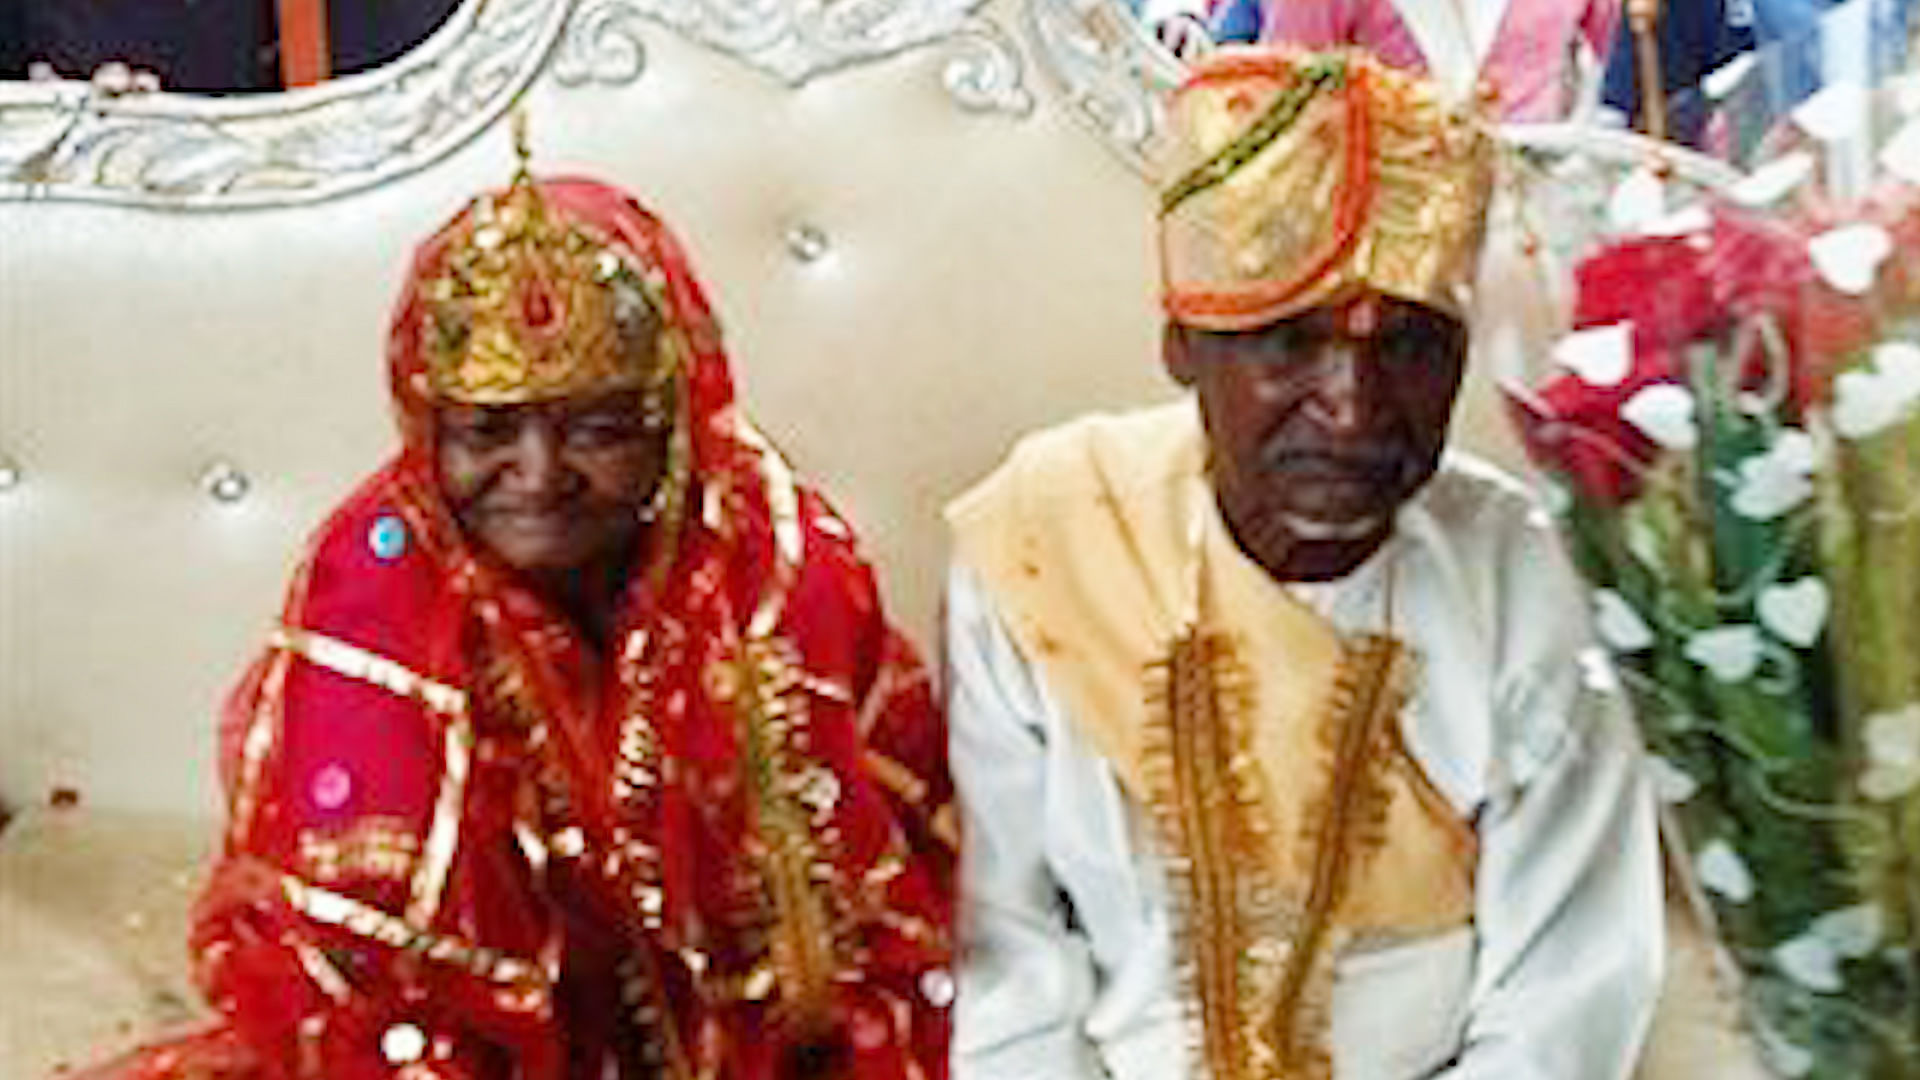 The elderly couple tied the knot in Jashpur, Chhattisgarh.